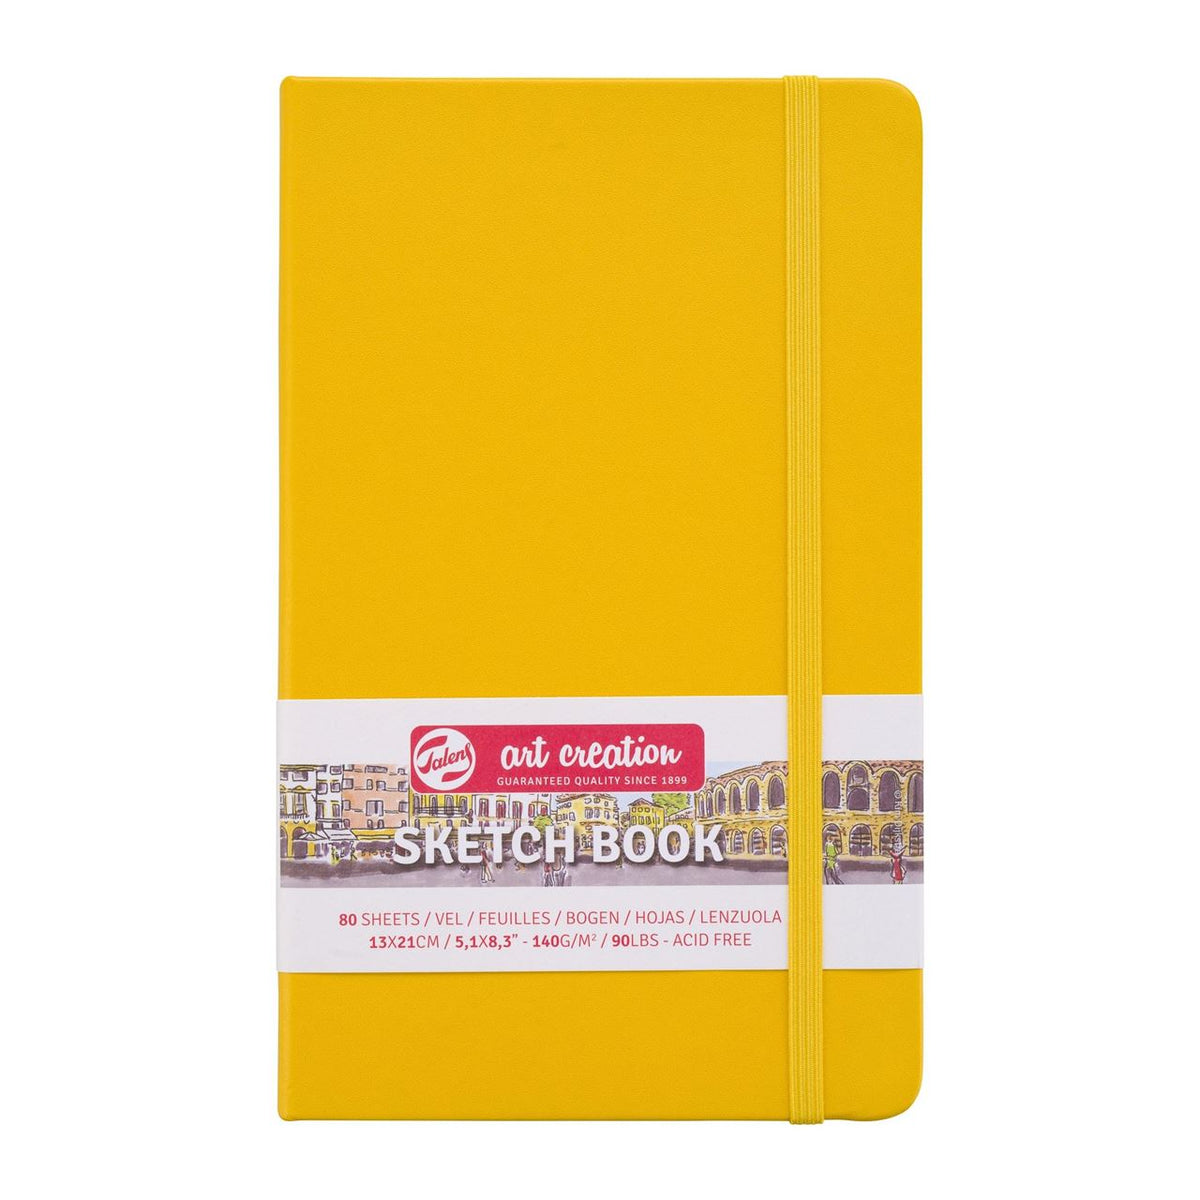 13x21cm Sketch Book - Yellow